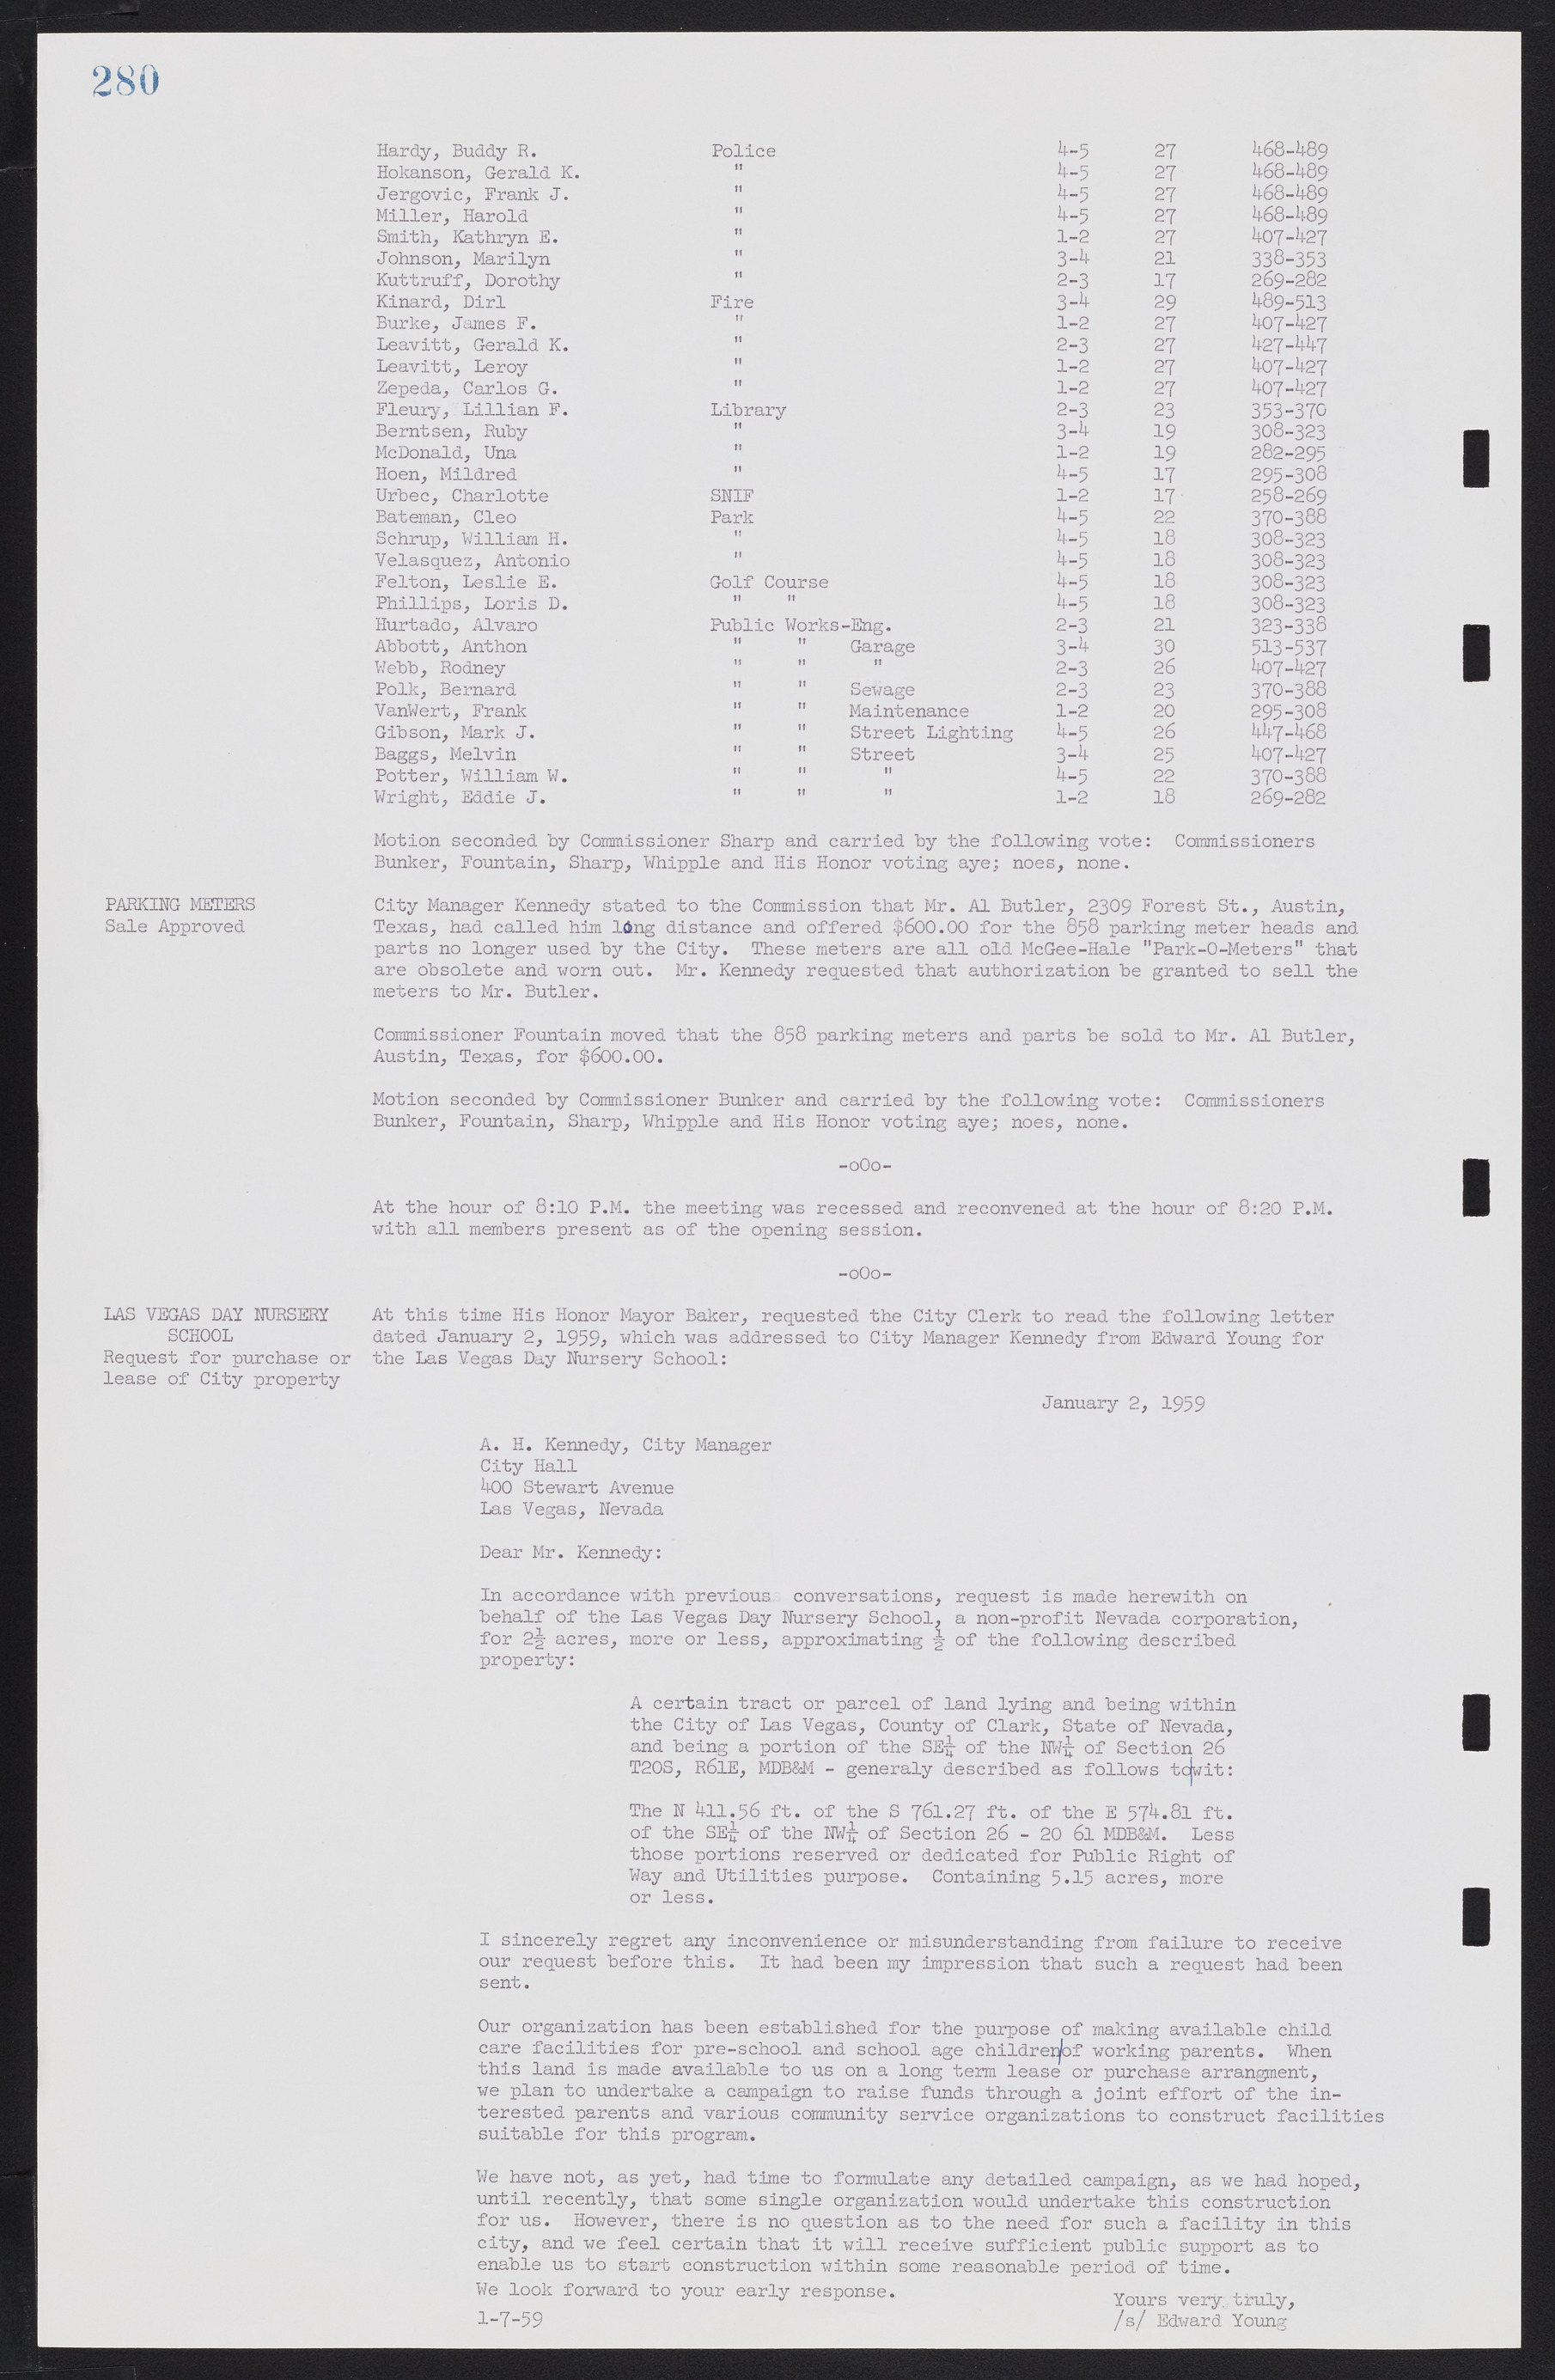 Las Vegas City Commission Minutes, November 20, 1957 to December 2, 1959, lvc000011-288